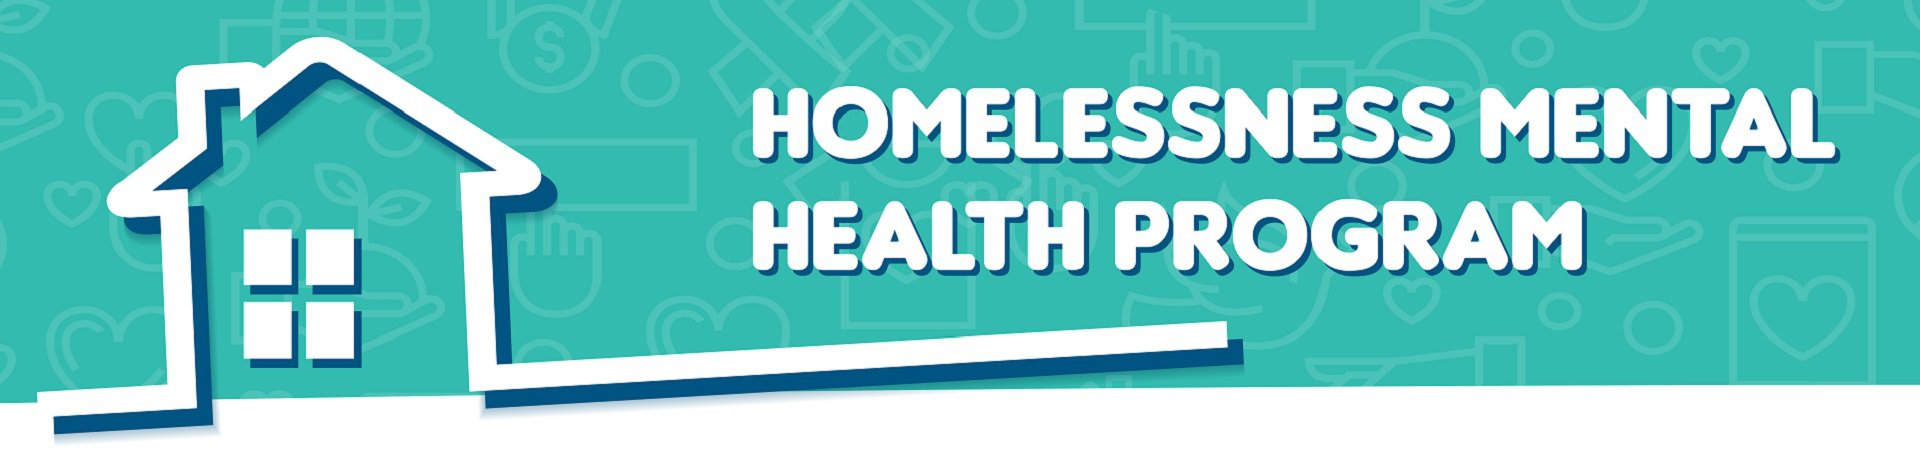 Homelessness Mental Health Program heading and sketch of house